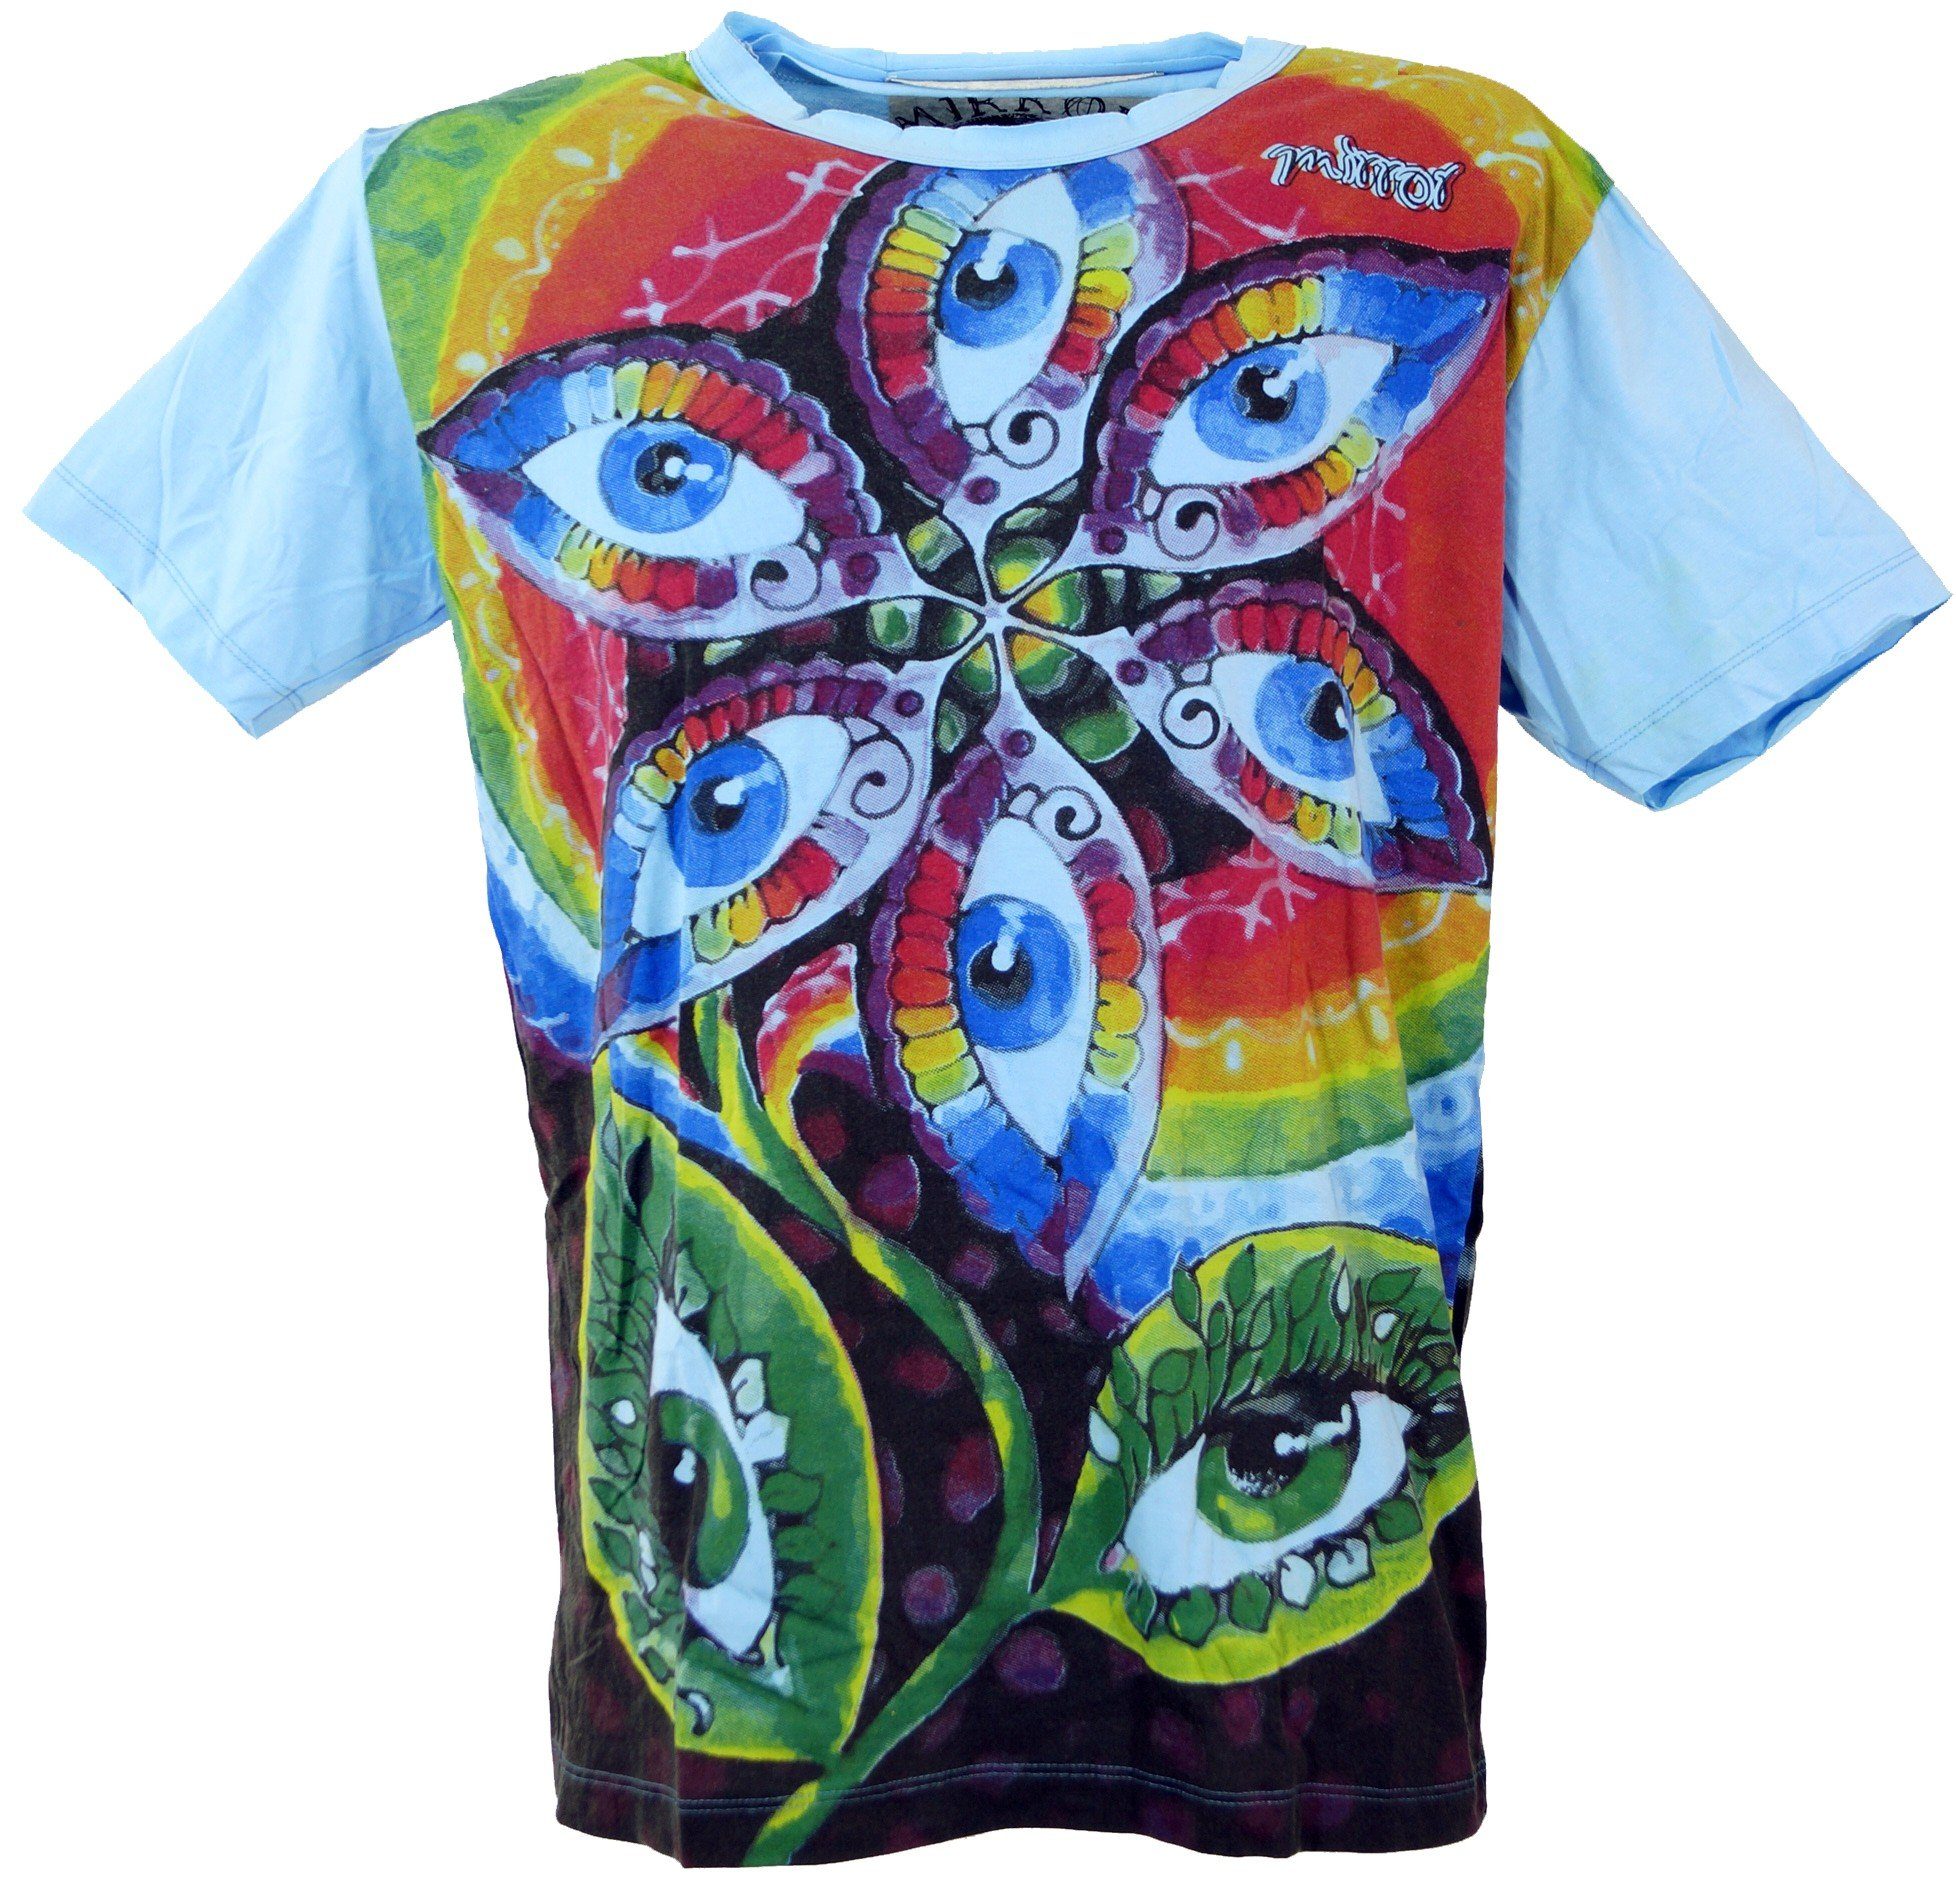 Guru-Shop T-Shirt Mirror T-Shirt - alternative Drittes Style, Festival, hellblau / hellblau Auge Auge Goa Bekleidung Drittes